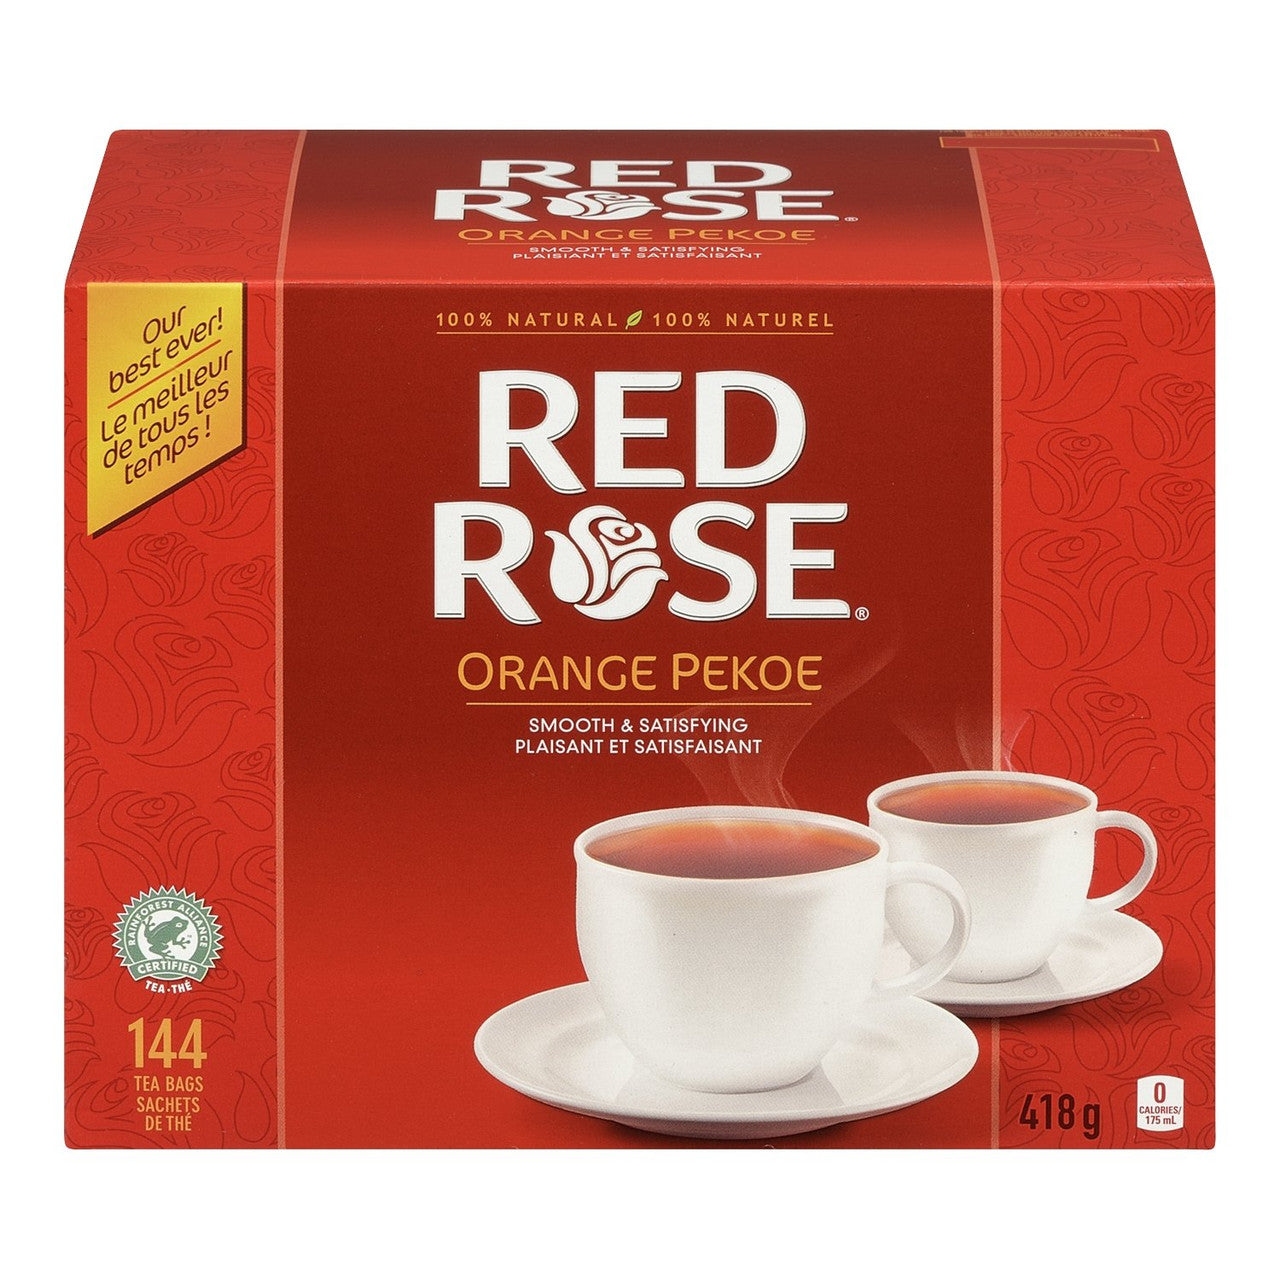 Red Rose Orange Pekoe Tea 418g/144 Tea Bags, Per Box, 4ct, {Imported from Canada}